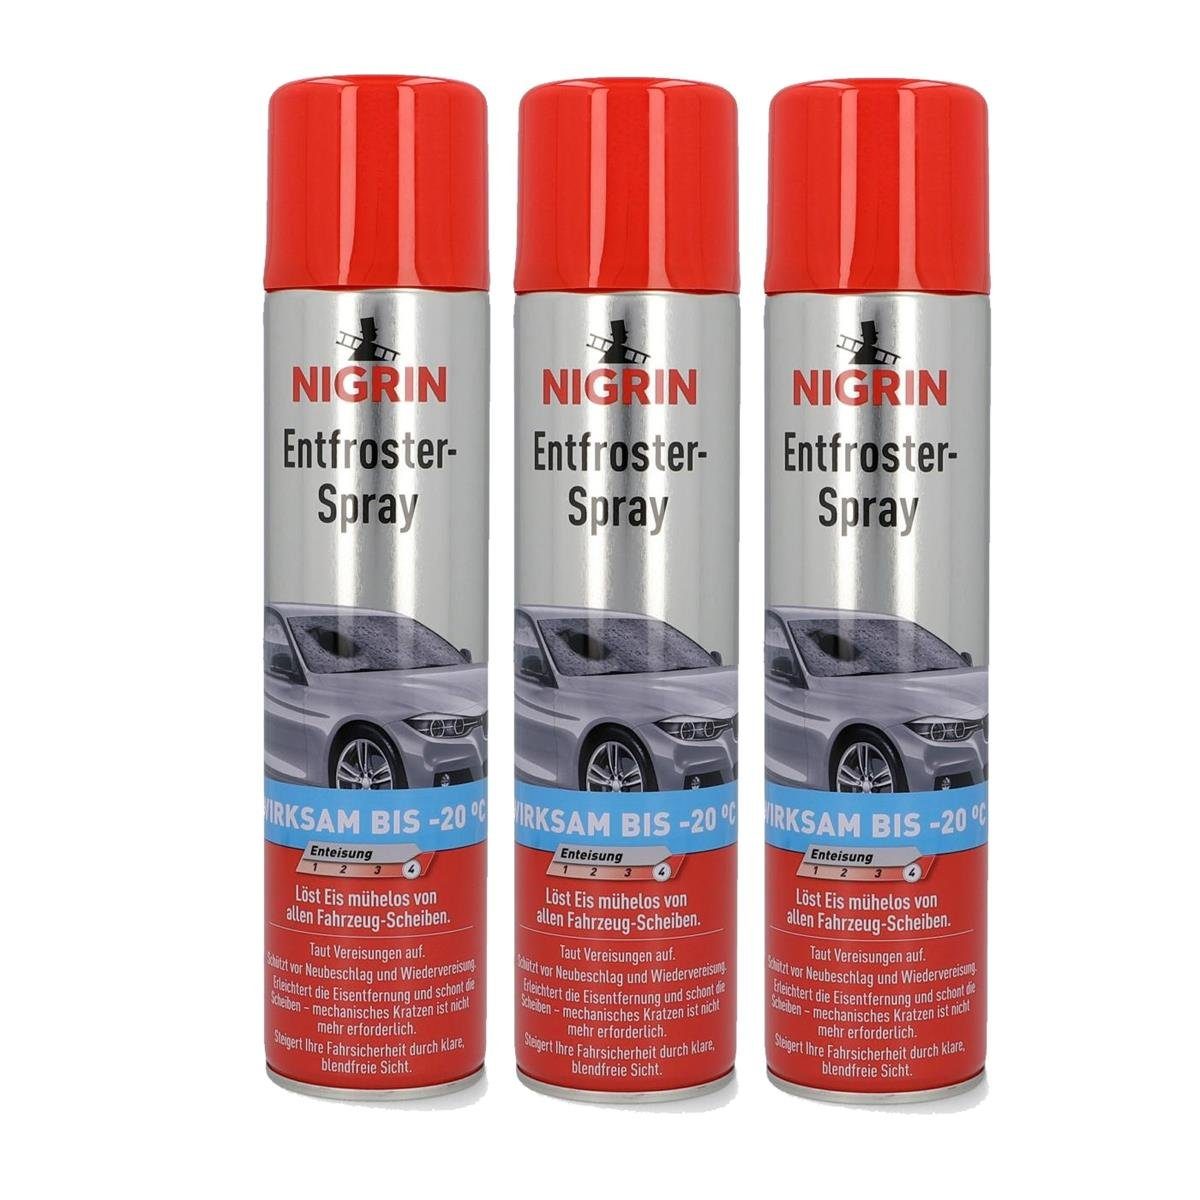 NIGRIN Multifunktionsöl NIGRIN Entfroster- Spray 400ml - Wirksam